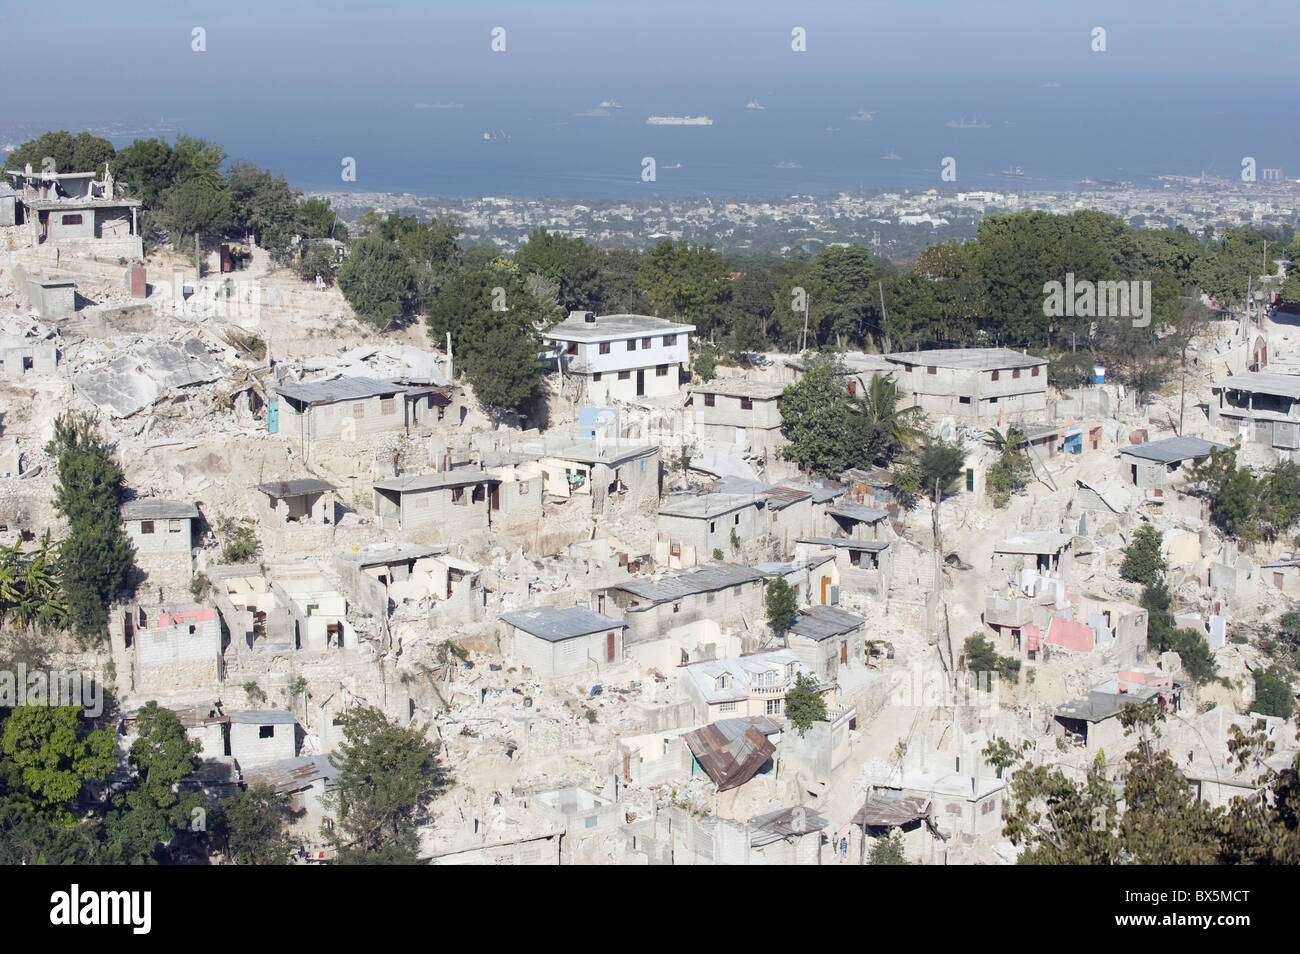 Januar 2010 Erdbeben verursachten Schäden in den Slums, Port au Prince, Haiti, Karibik, Karibik, Mittelamerika Stockfoto